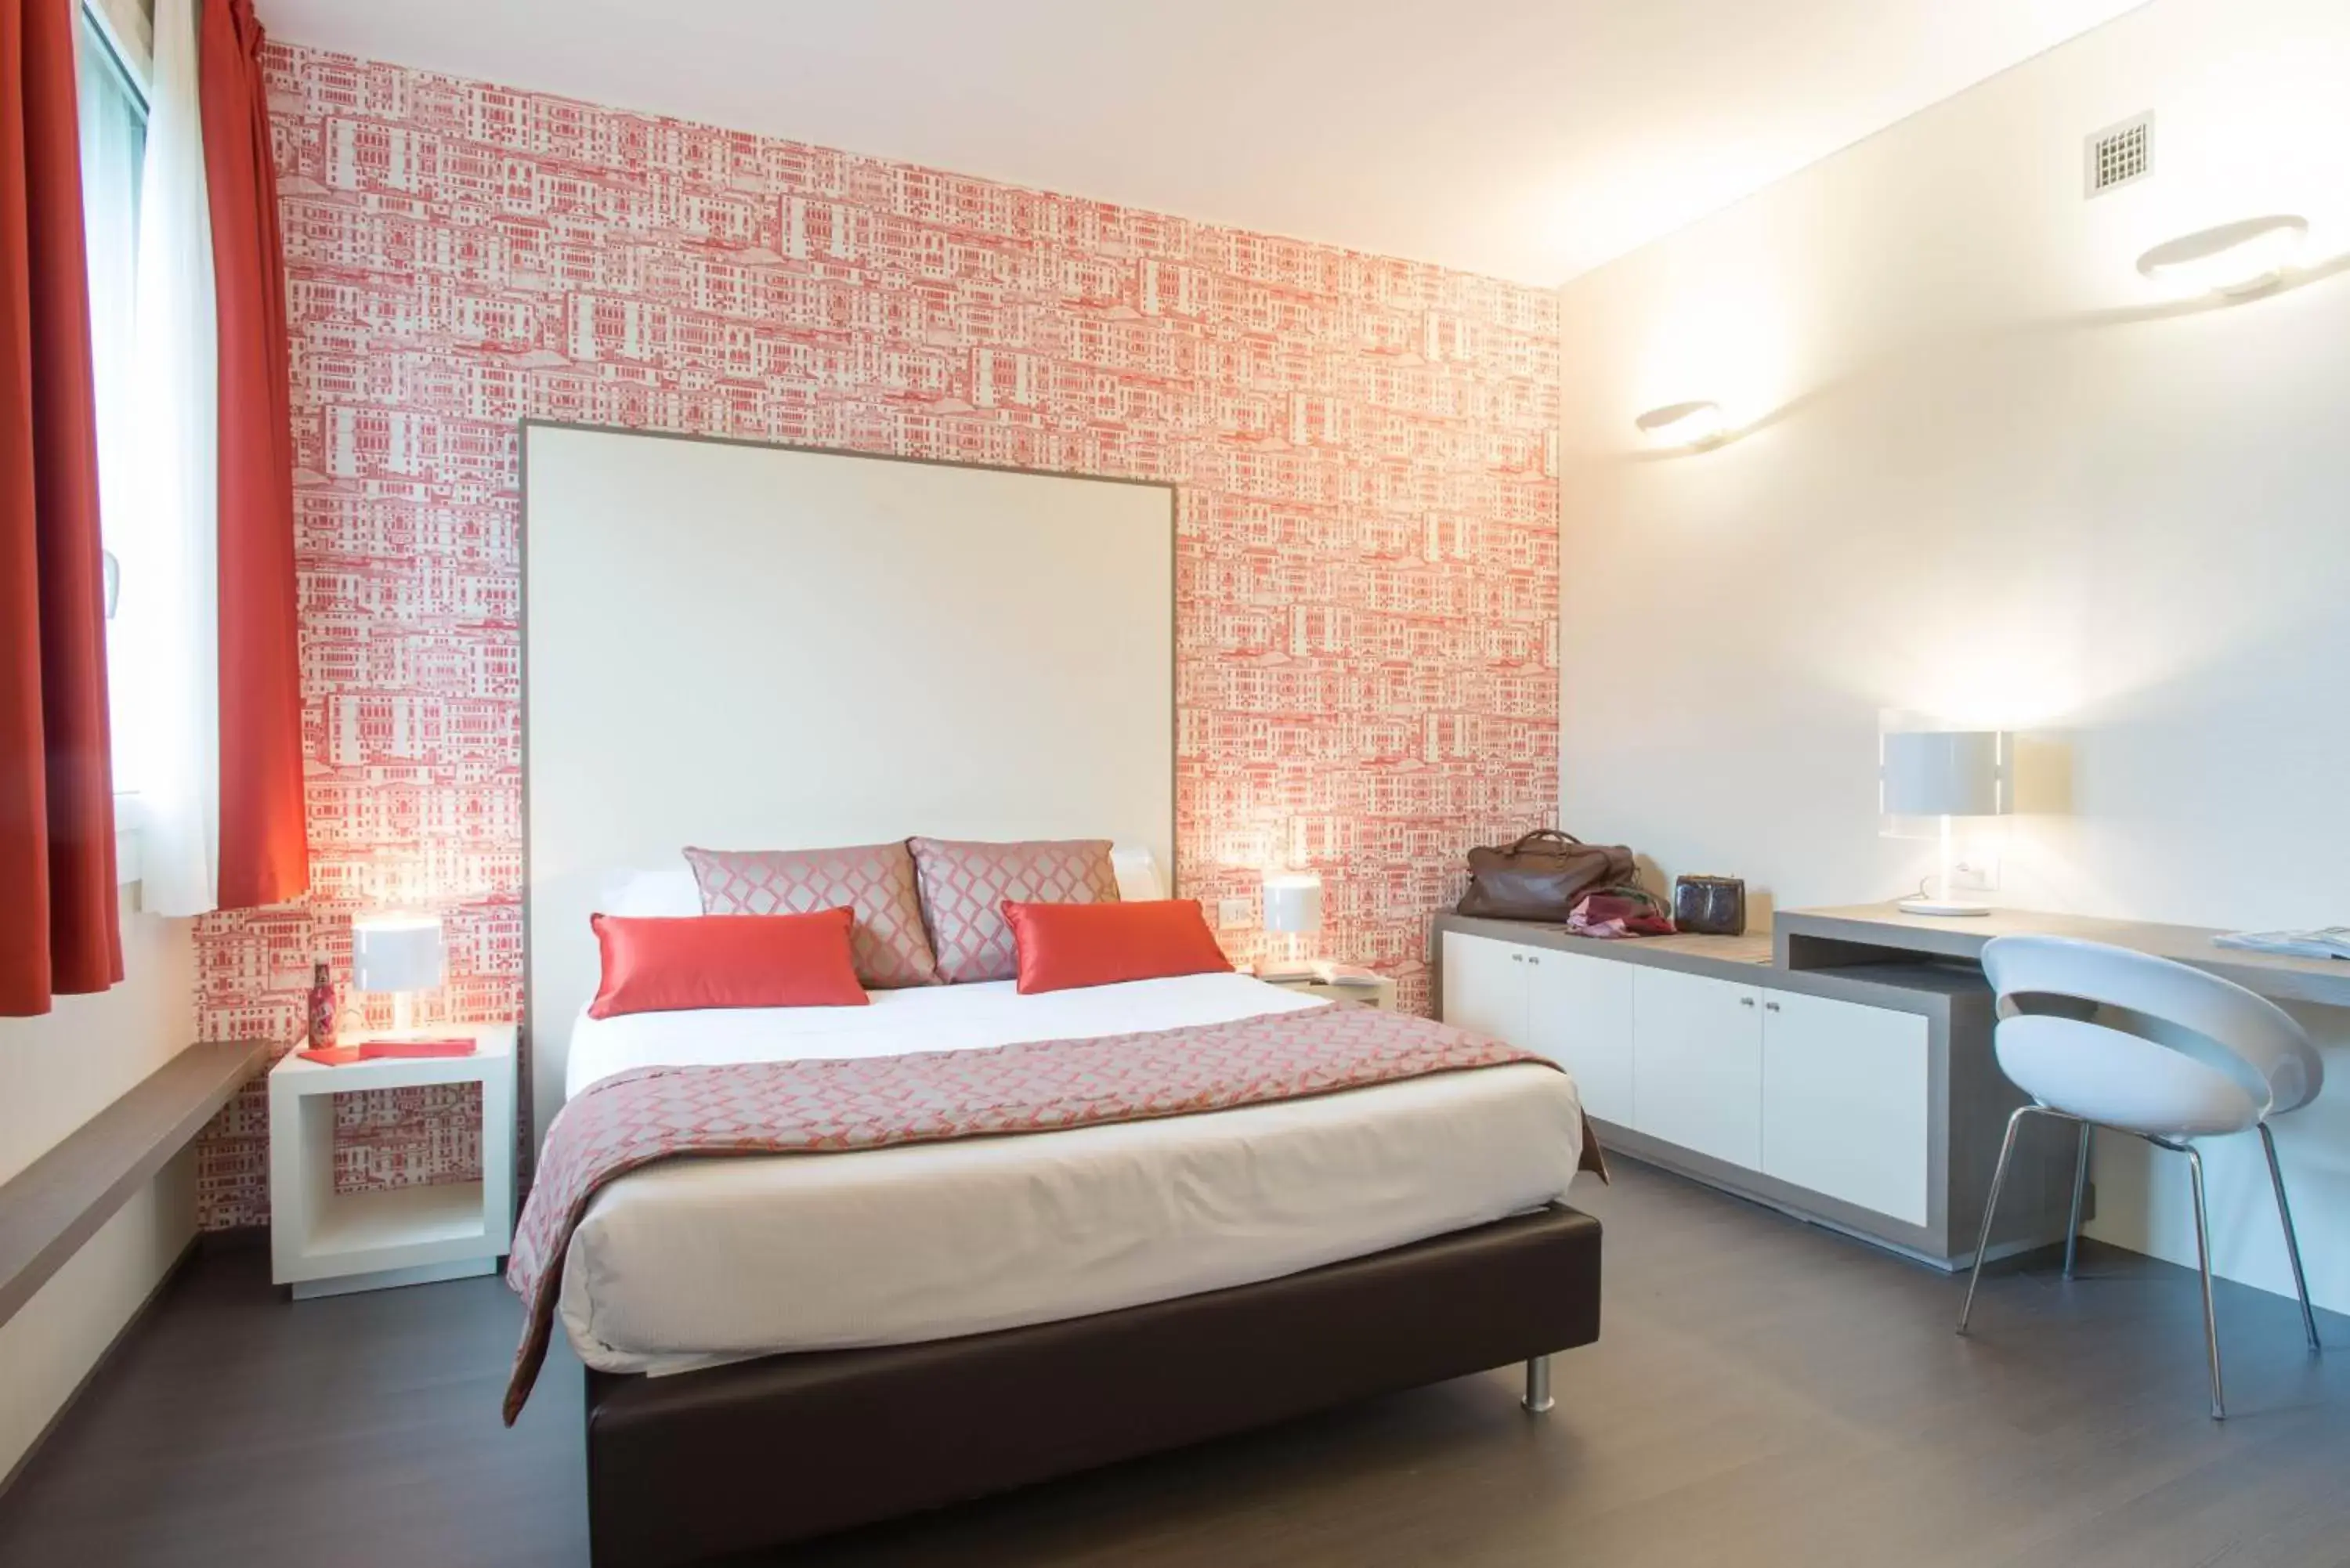 Double Room with Park View in Hotel Tiziano - Gruppo Mini Hotel